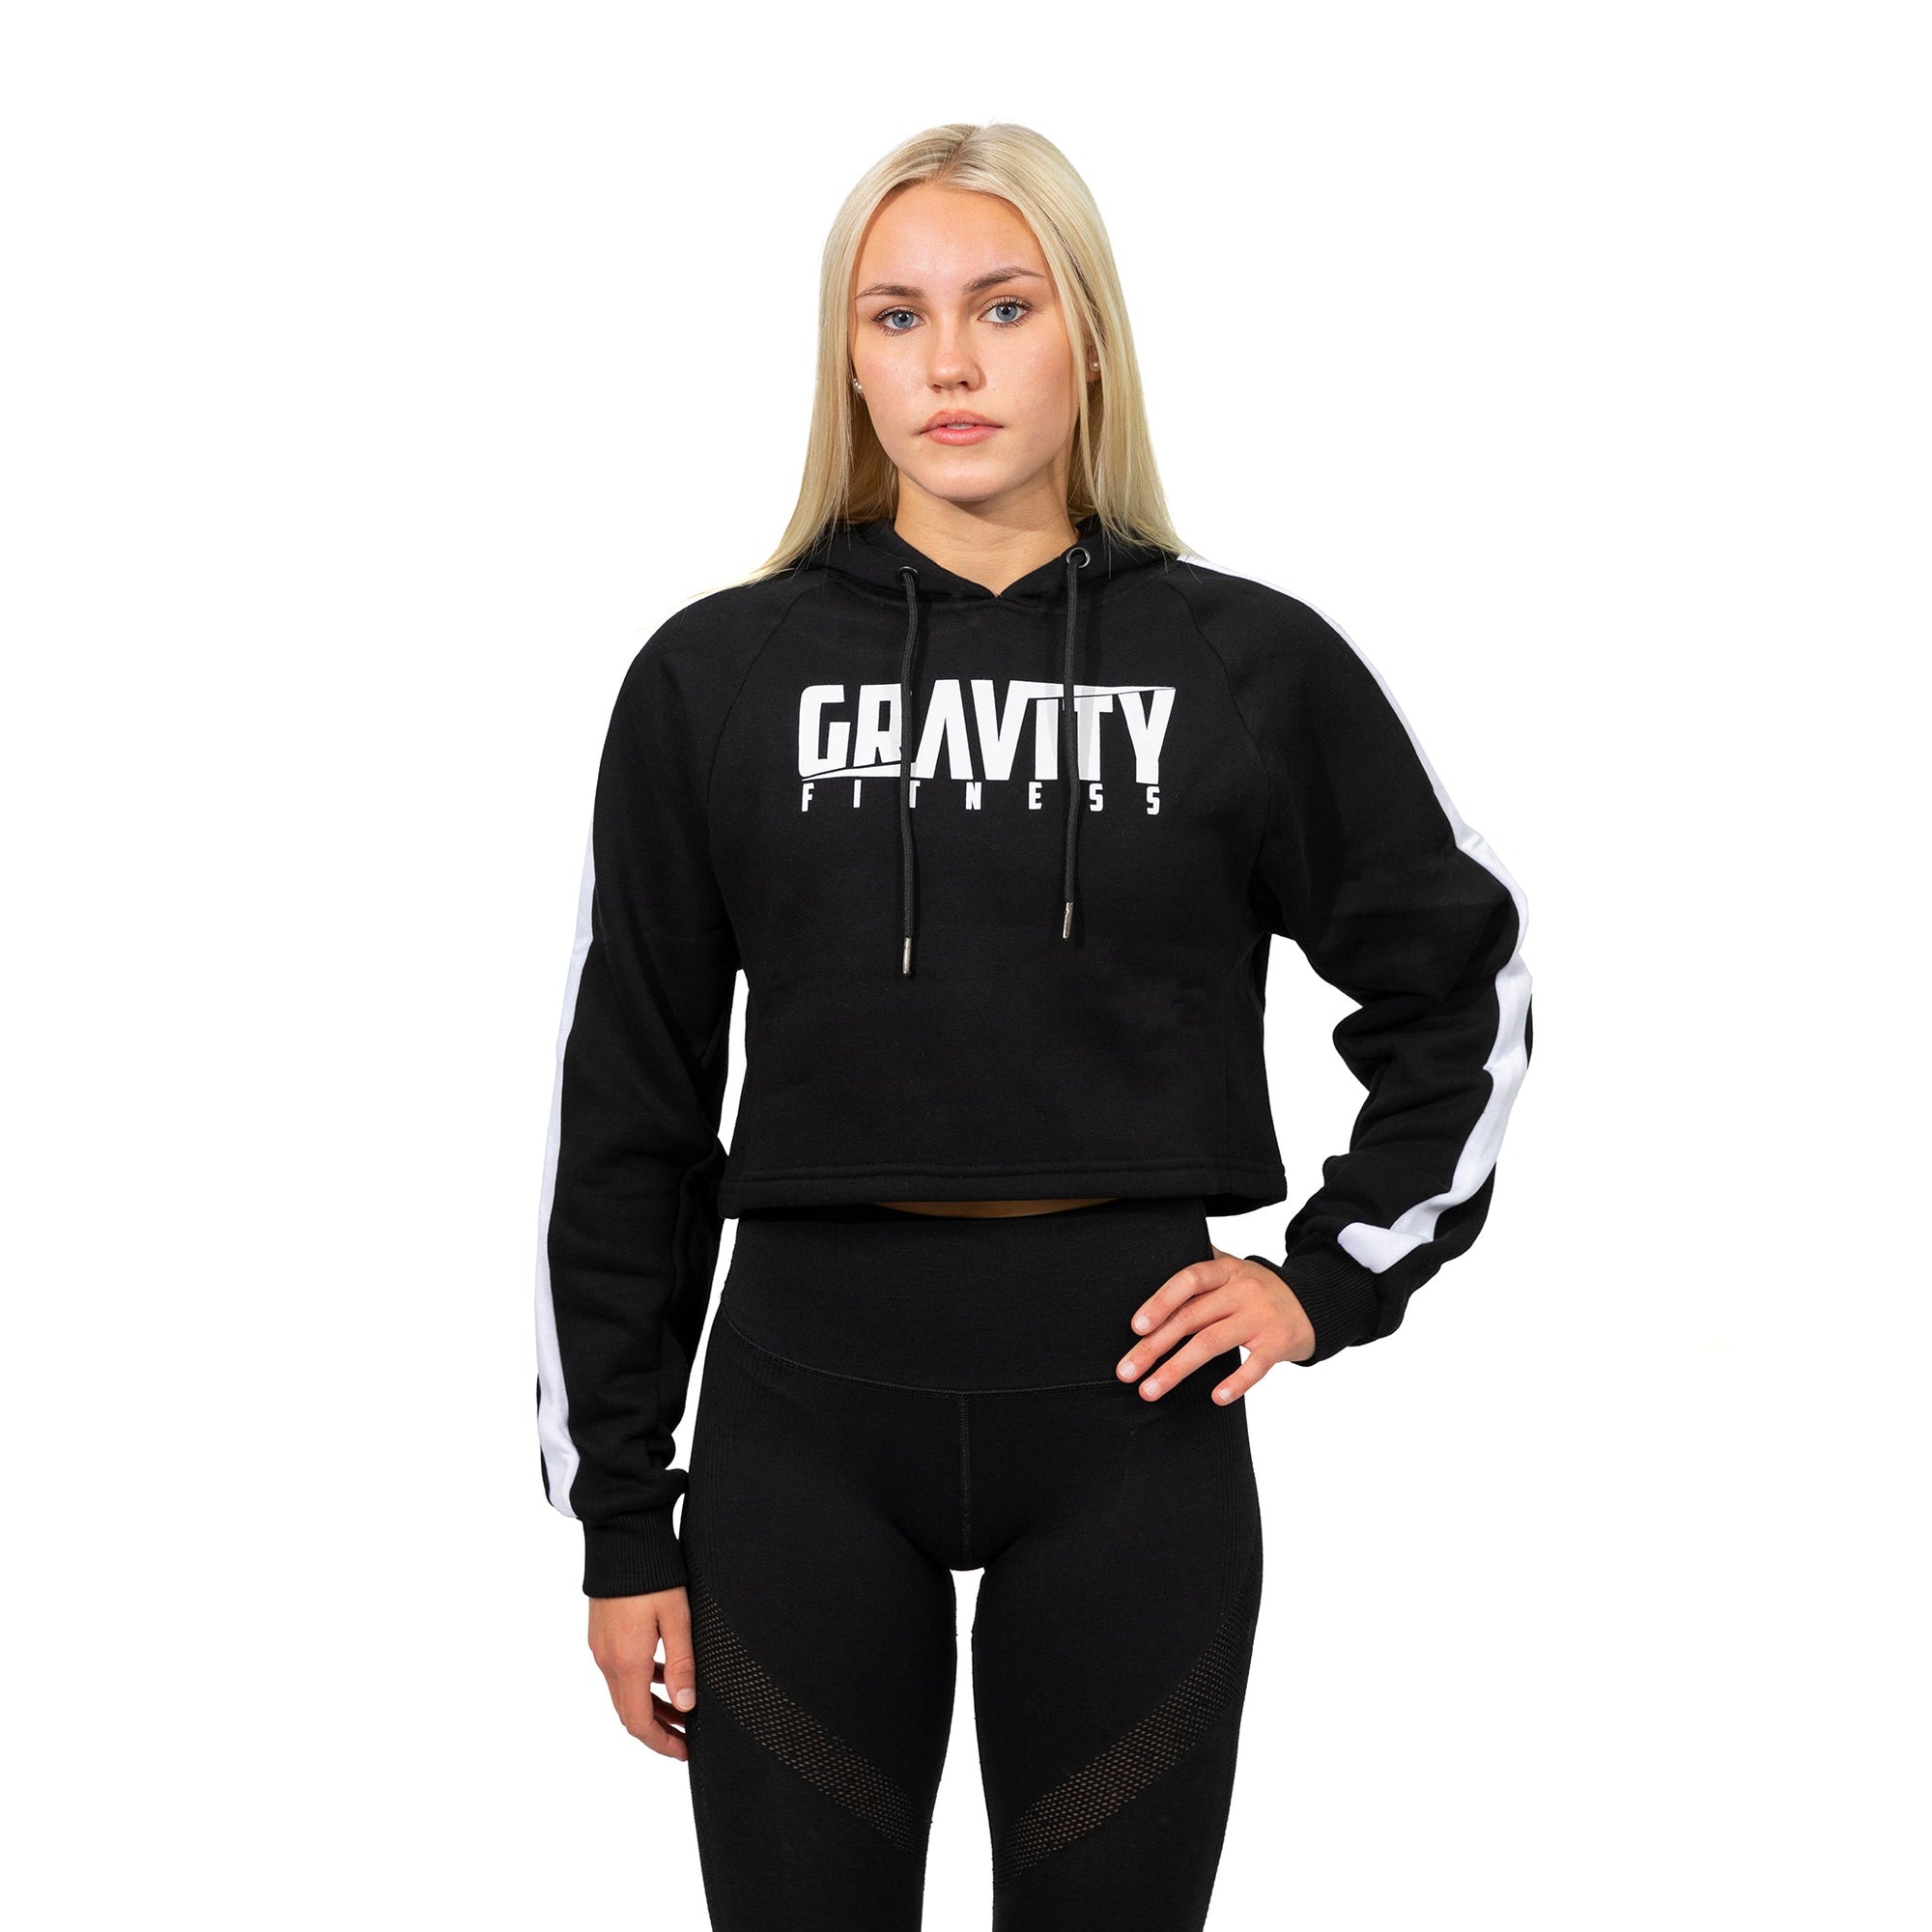 Gravity Fitness "LOGO" Women's Cropped Hoodie